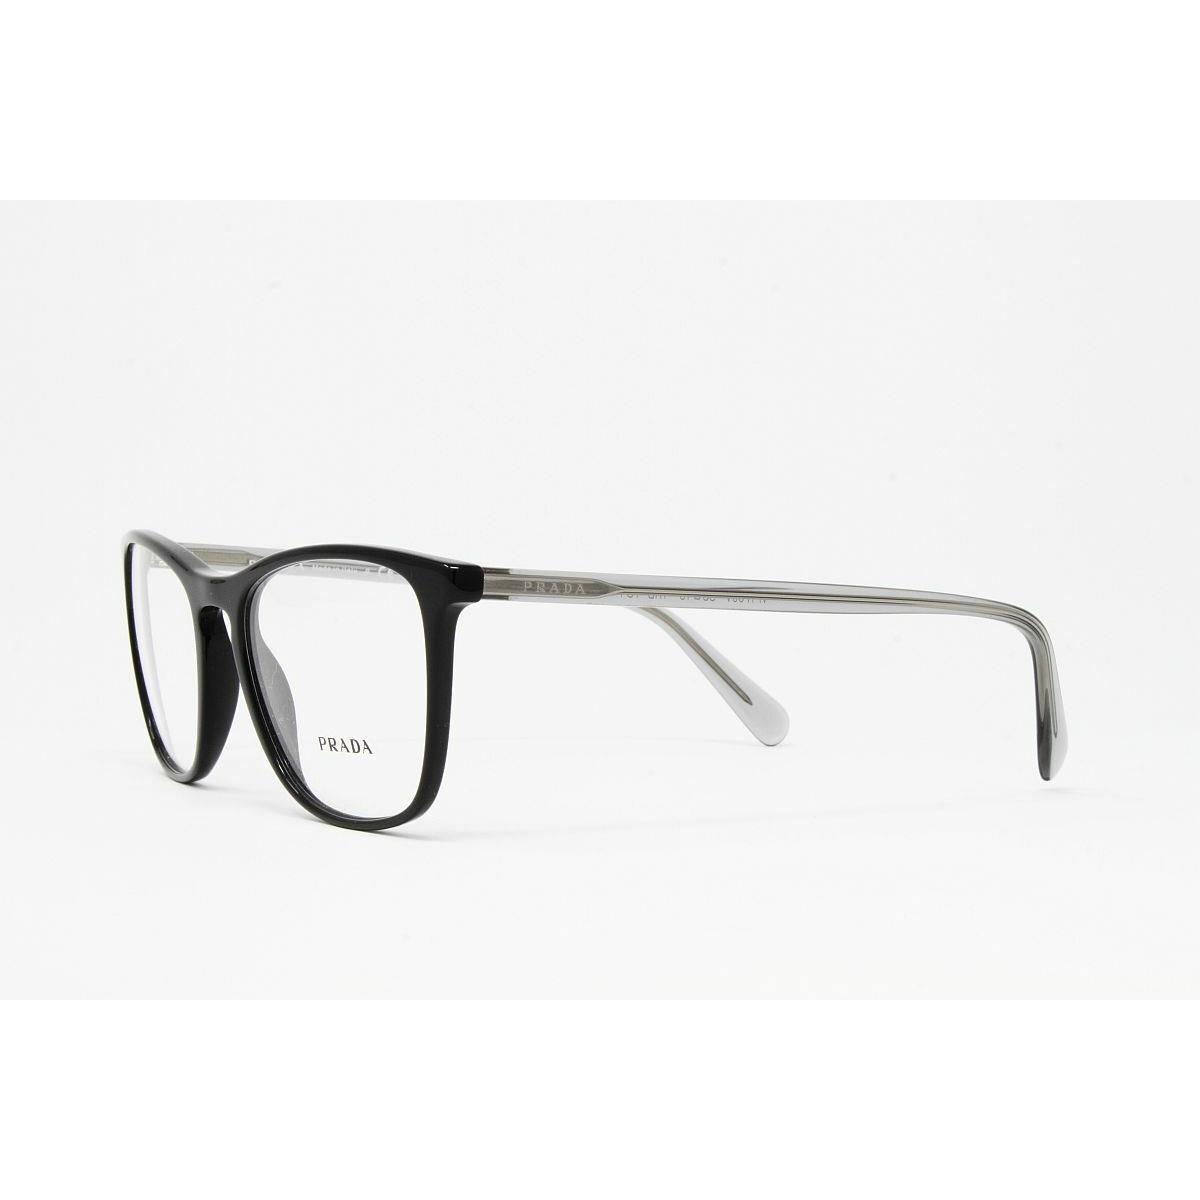 Prada eyeglasses  - Black Frame 1